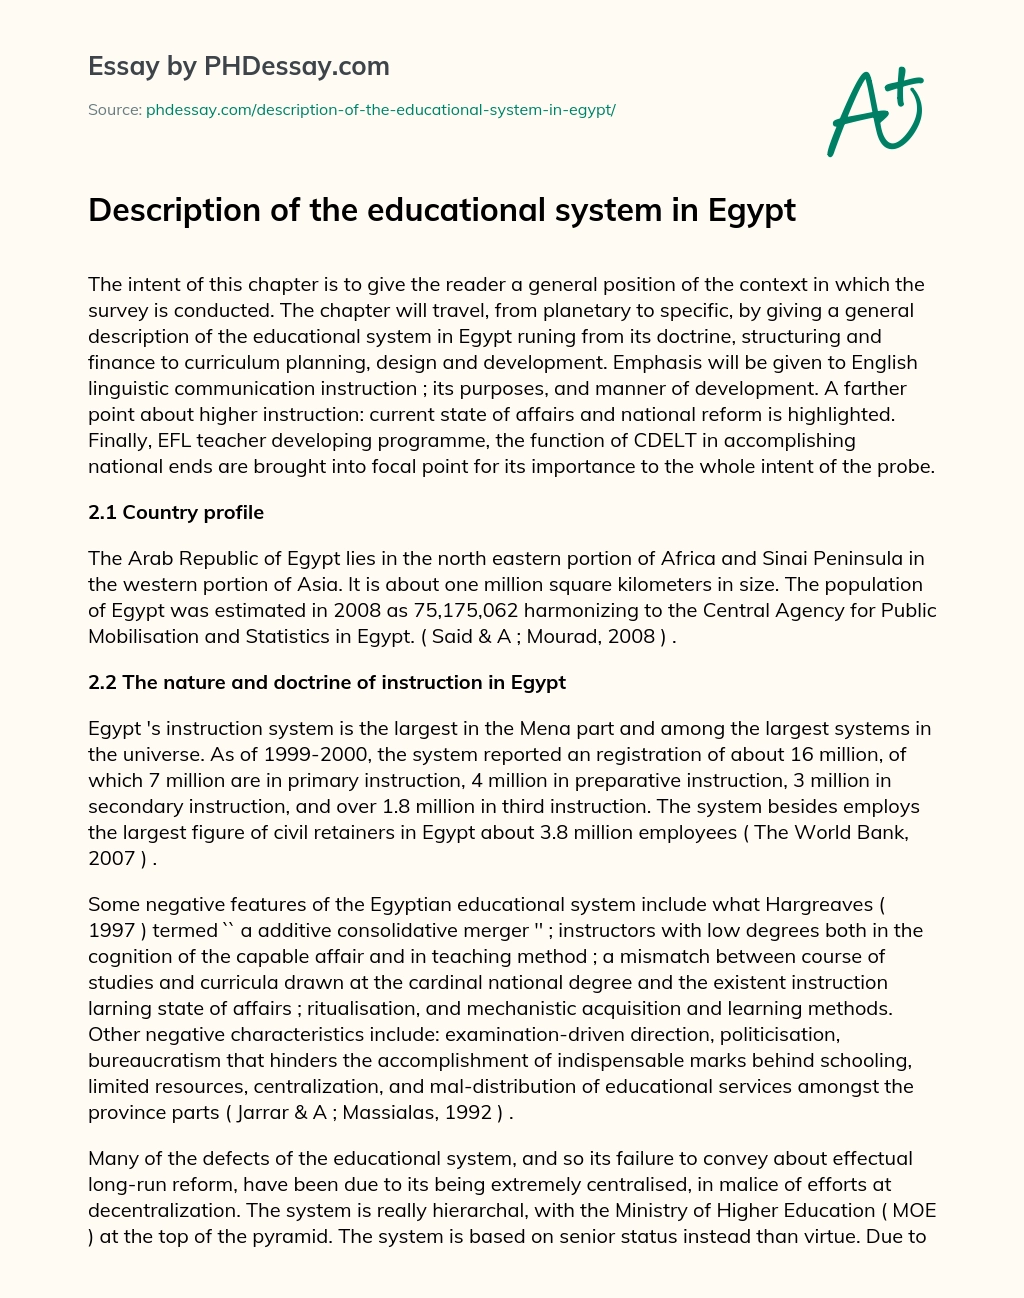 education in egypt essay